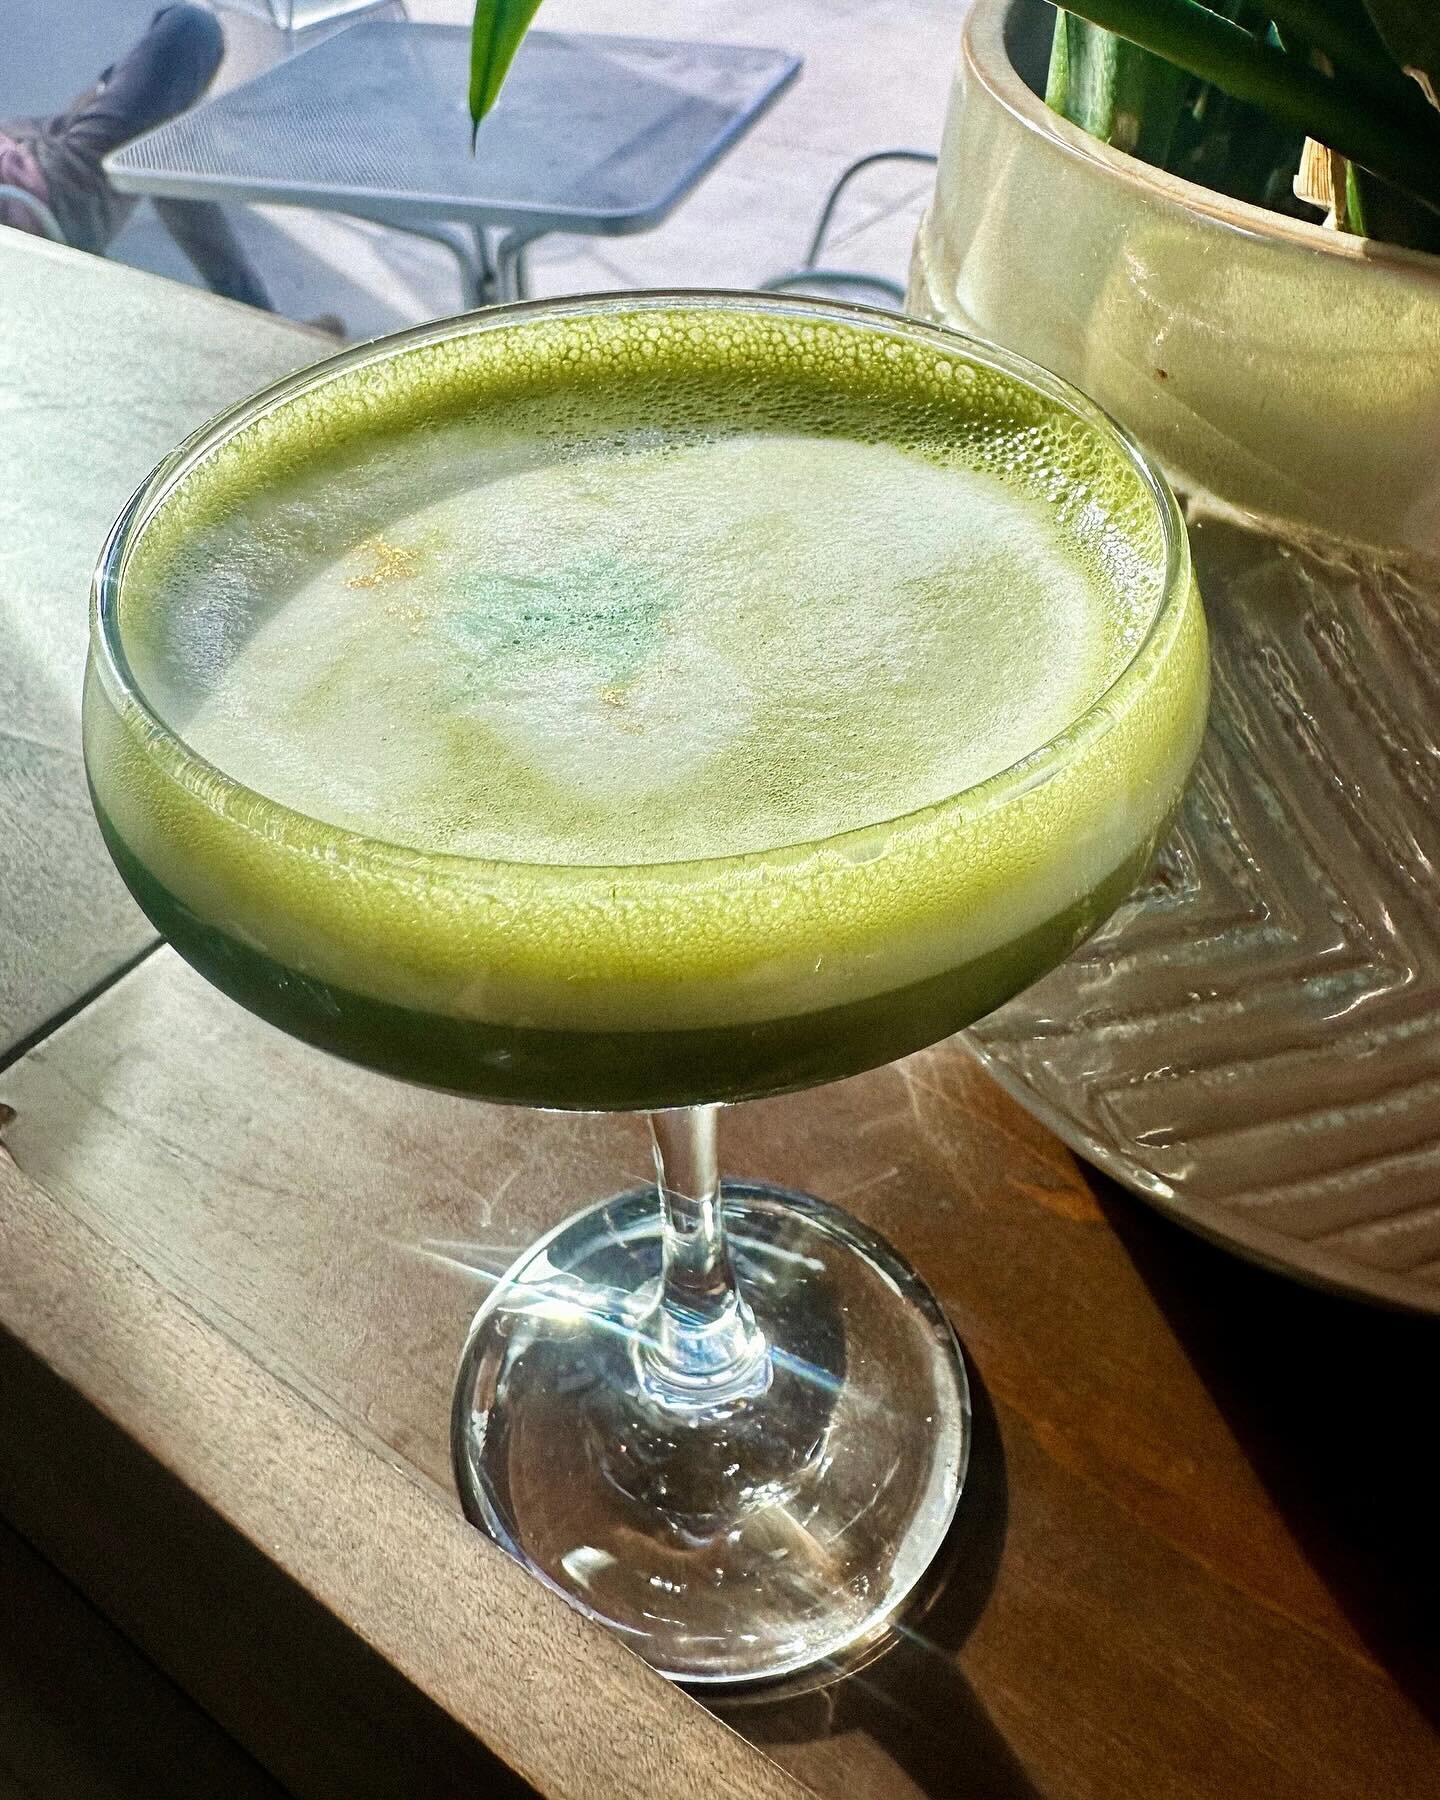 🍀 Cocktail 🍸 Special this weekend! Leprechaun 4: Avo in Space 👽 

@drinkcathead  Vodka
Branca Menta Liqueur 
Vanilla
Matcha
Oat Milk 
Mint Bitters
Gold Glitter 
.
.
.
#plantbased #vegan #restaurant #nashville #nashvillerestaurant #cocktails